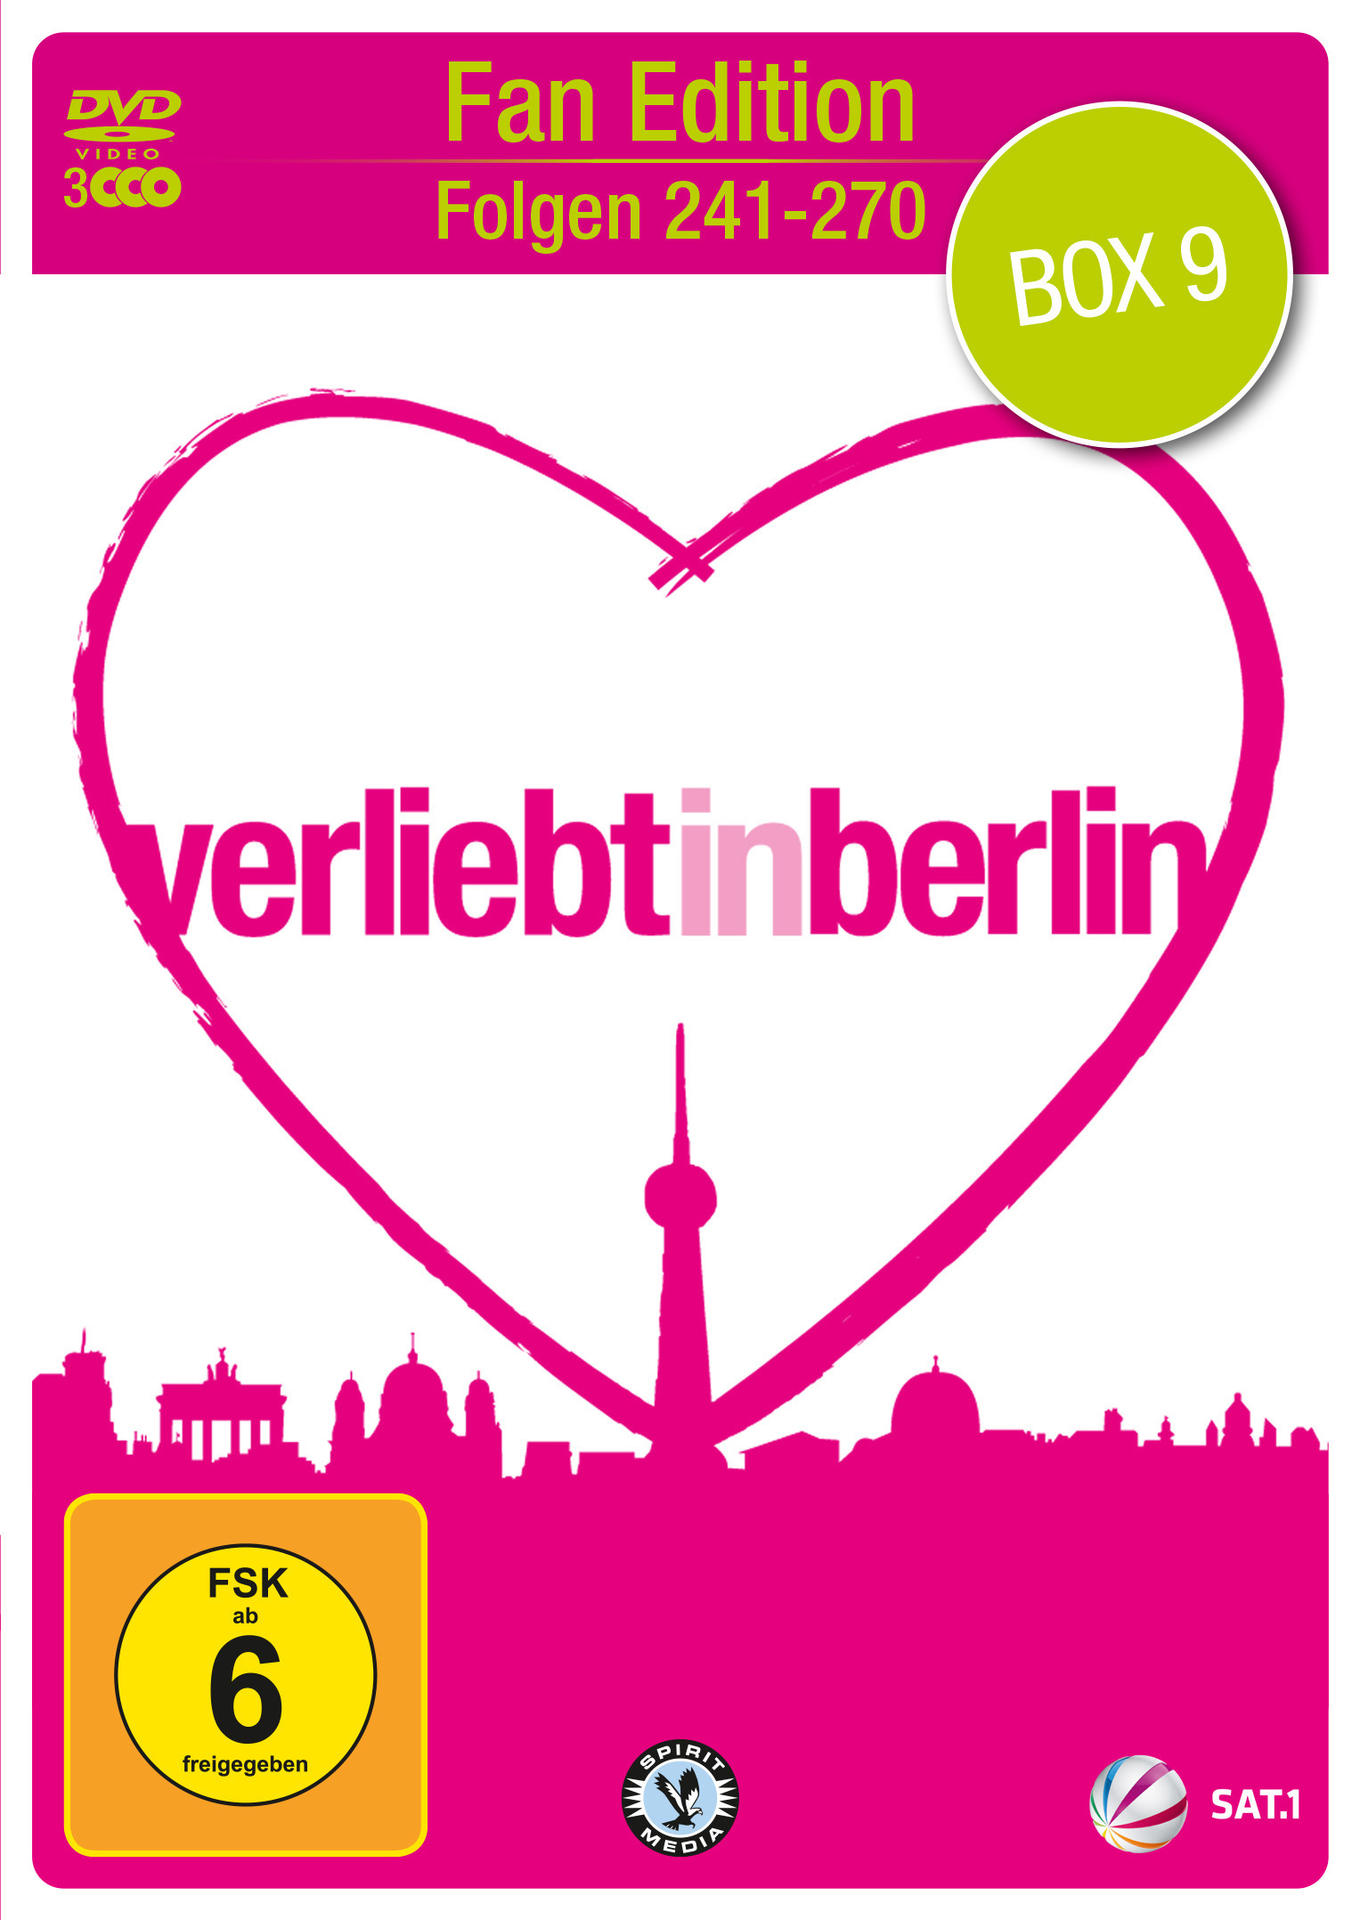 Verliebt In Berlin - - 241-270 Folgen Box 9 DVD